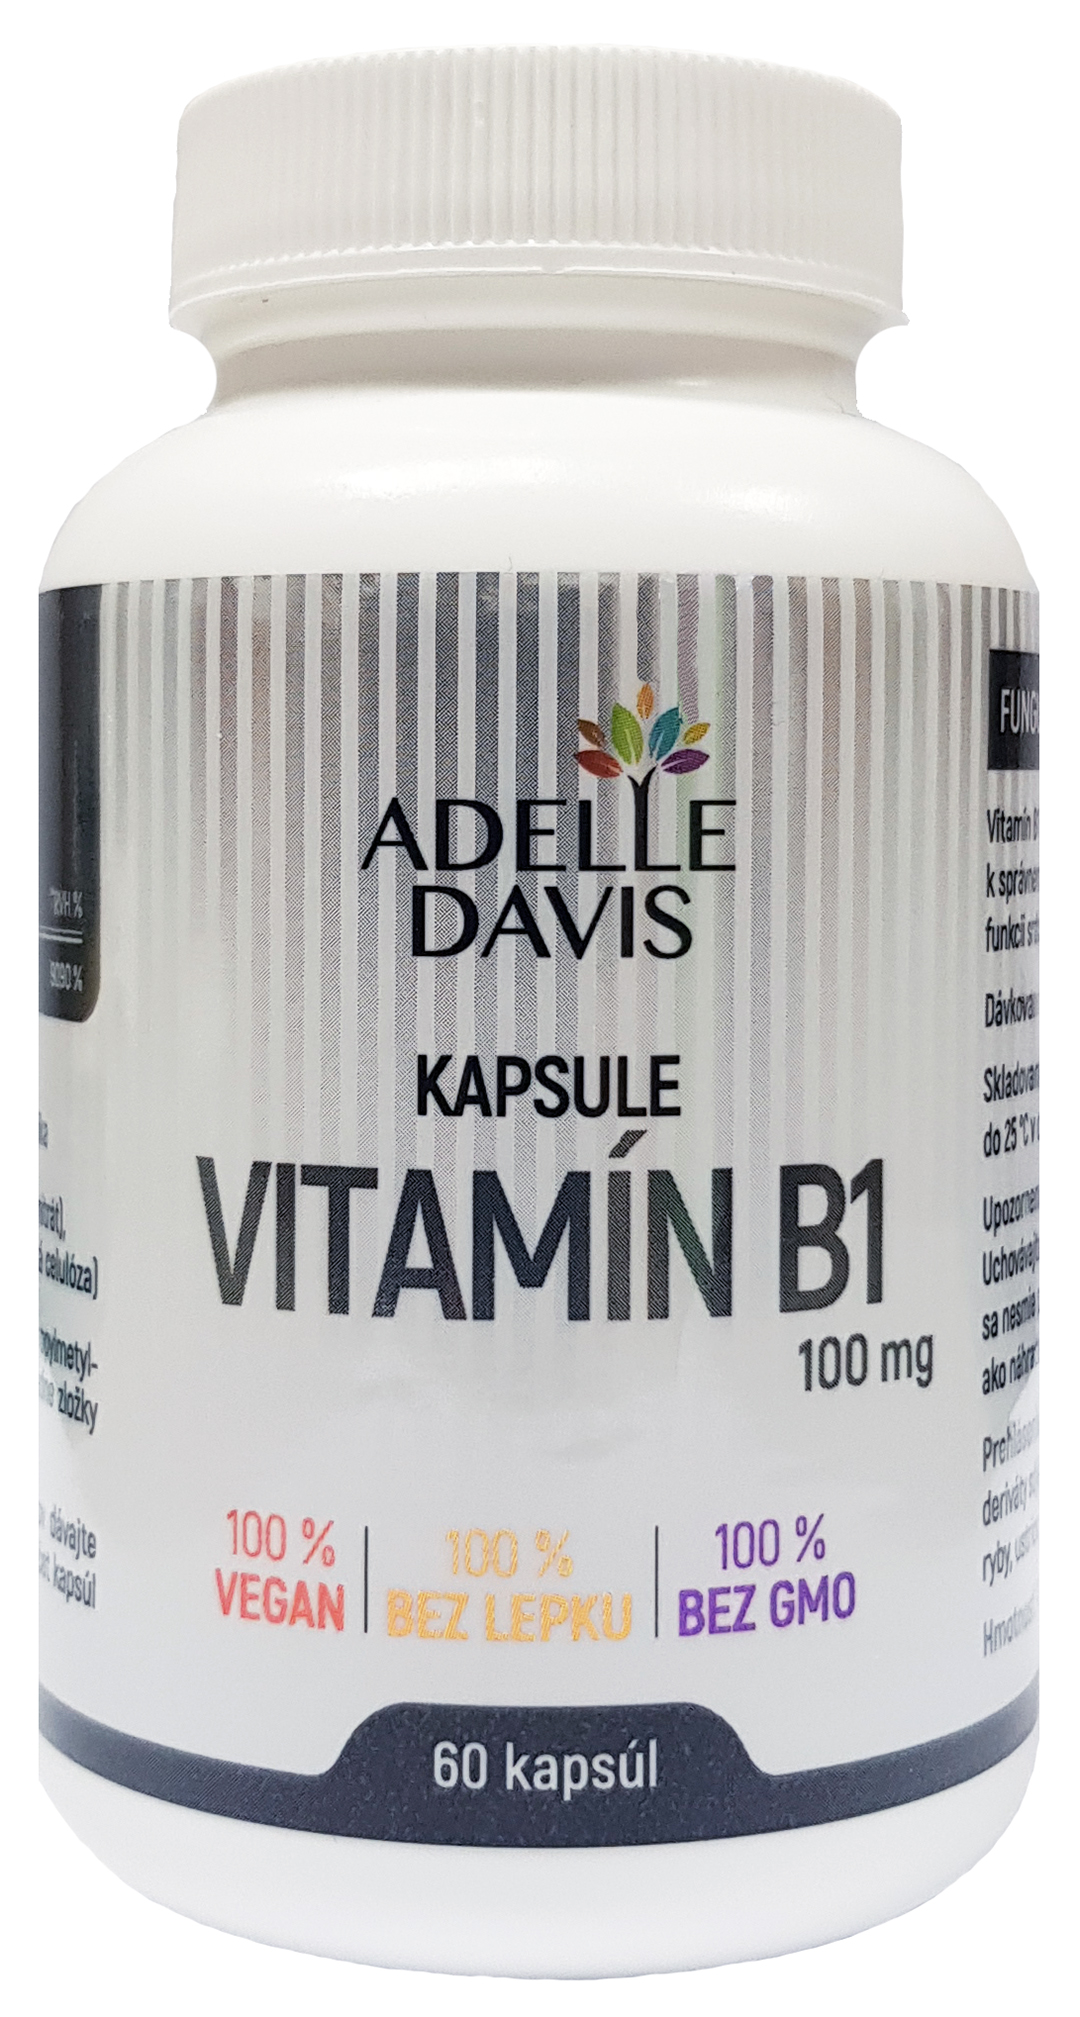 Adelle Davis - Vitamin B1 100 mg, 60 kapslí